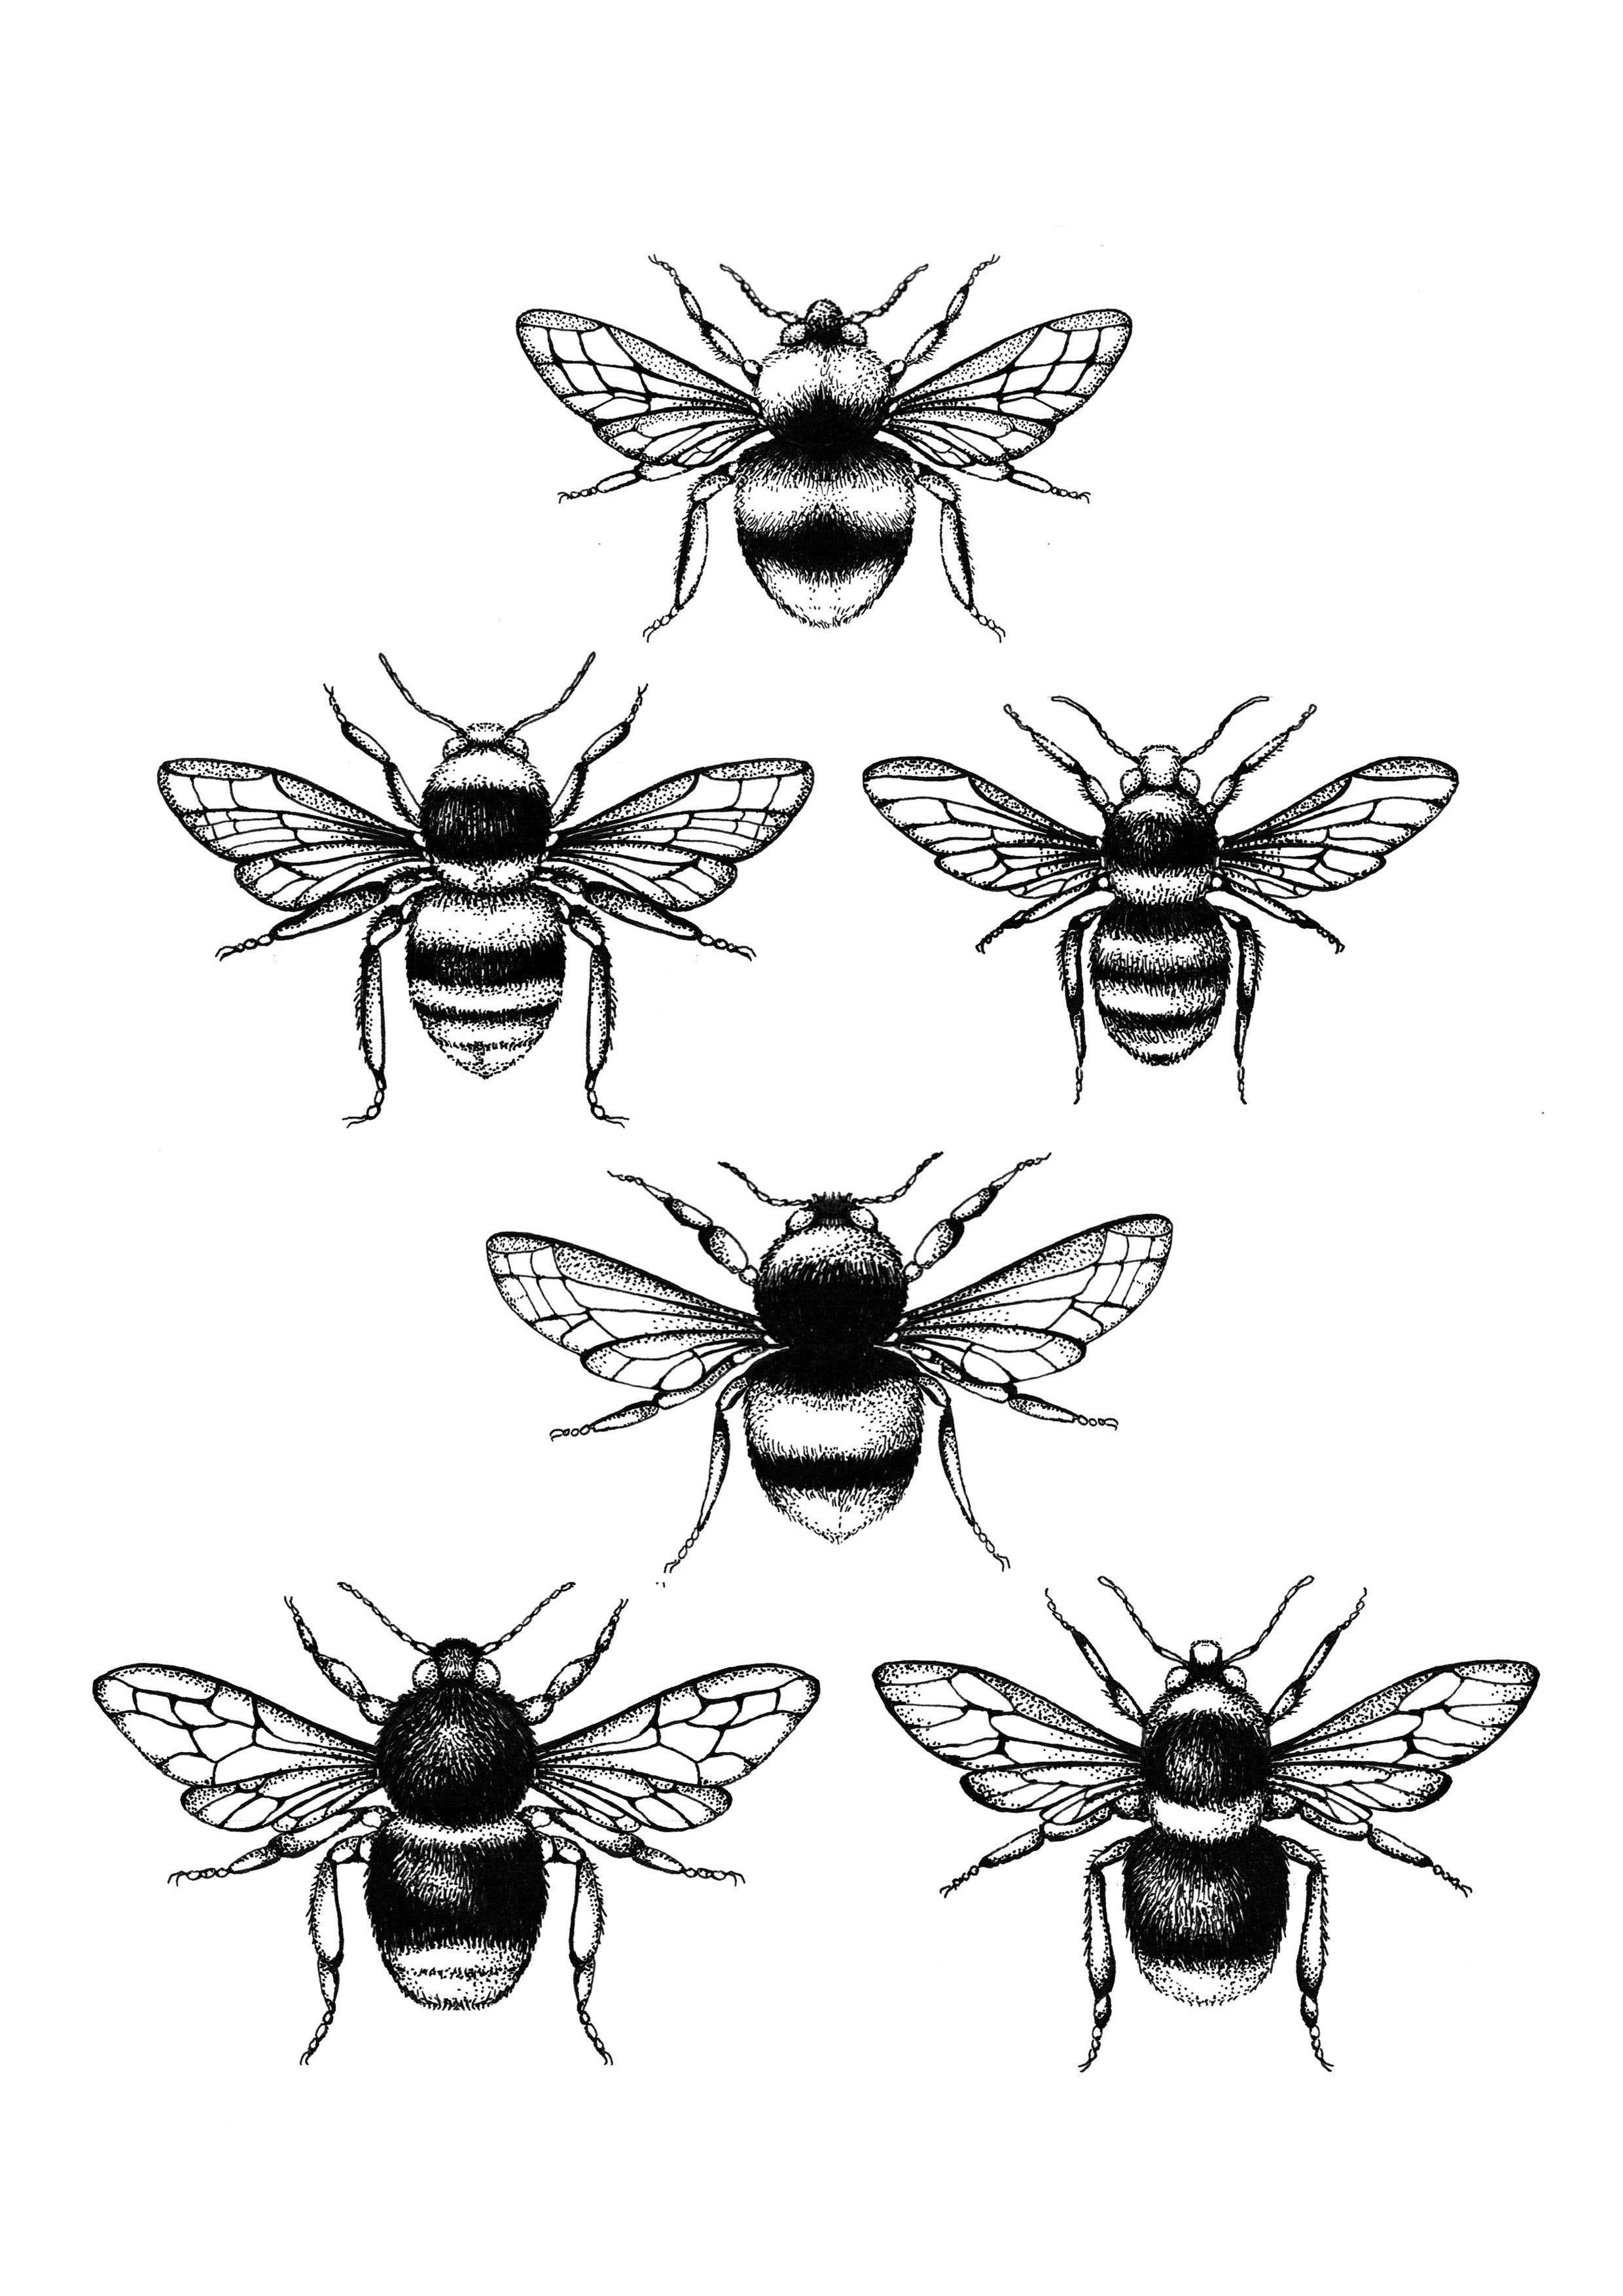 'British Bees' Fine Art Print - Emily Carter London